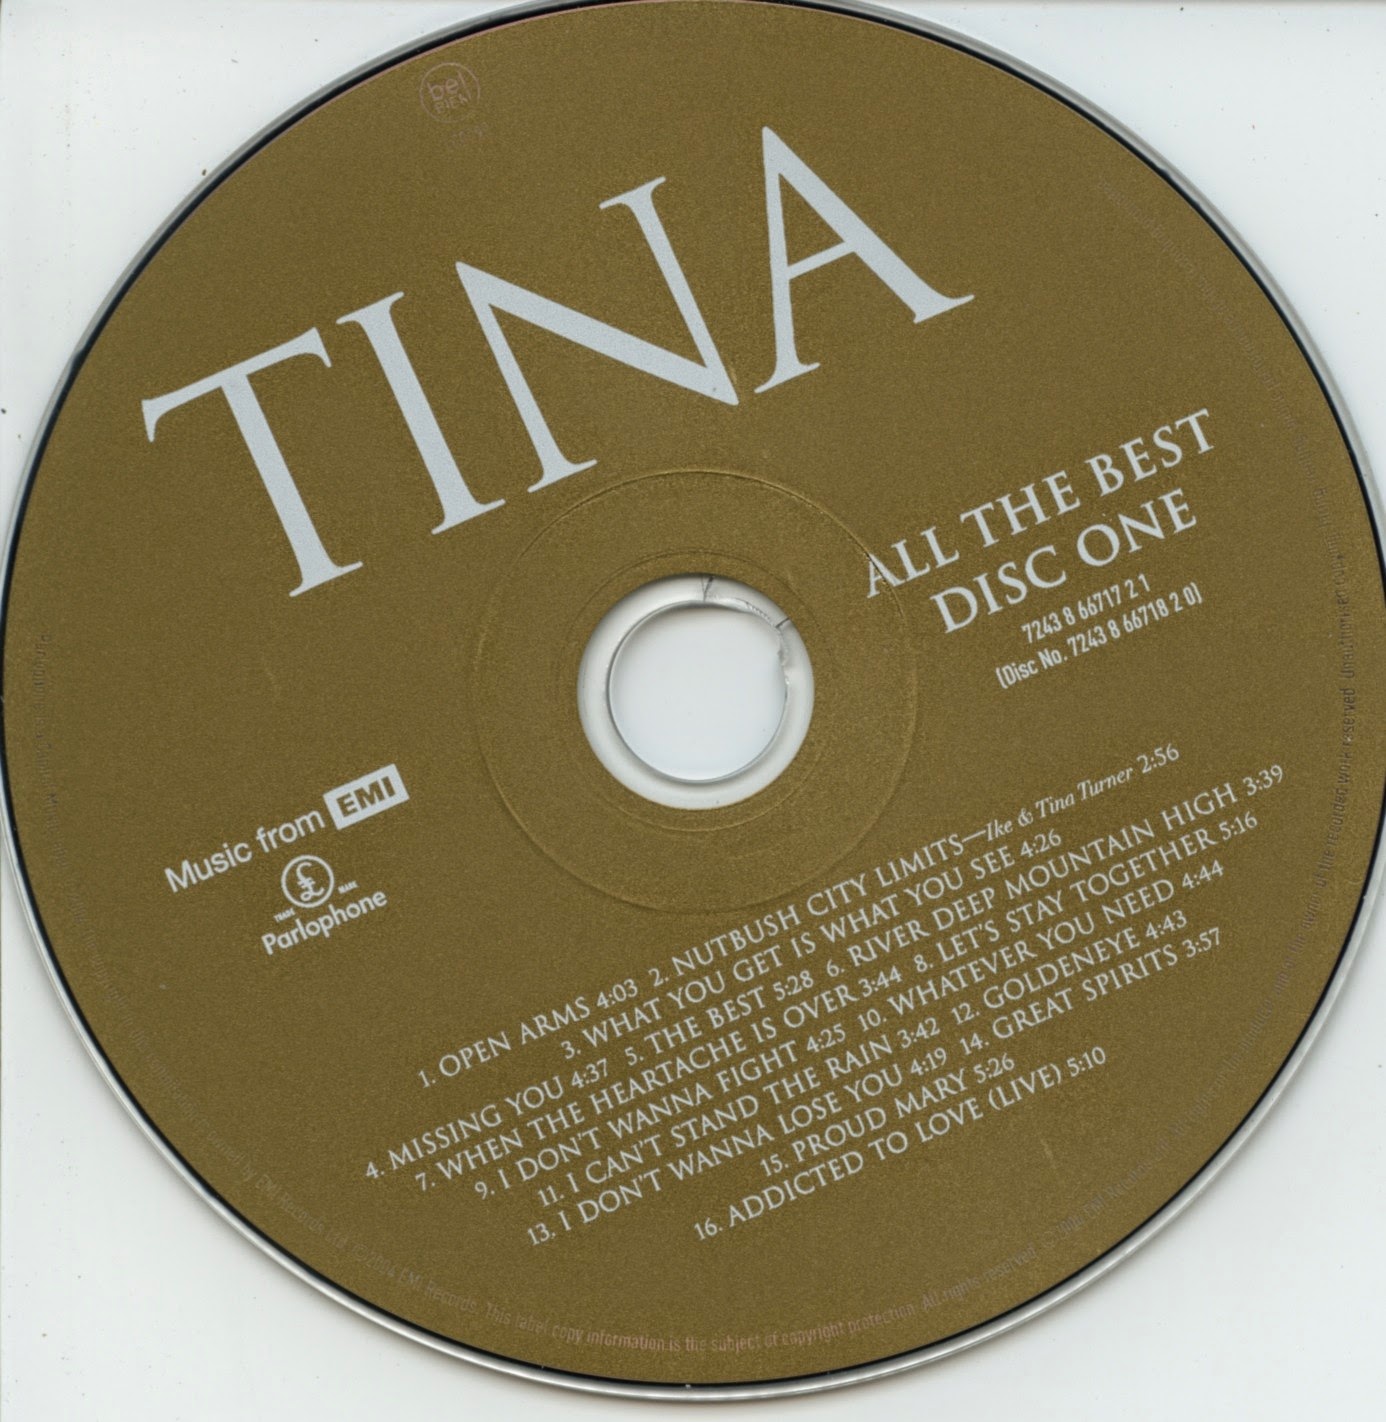 Тернер бест перевод. Tina Turner 2000. Tina Turner - (all the best) - 2010г. Tina Turner 1963. Tina Turner – simply the best CD.